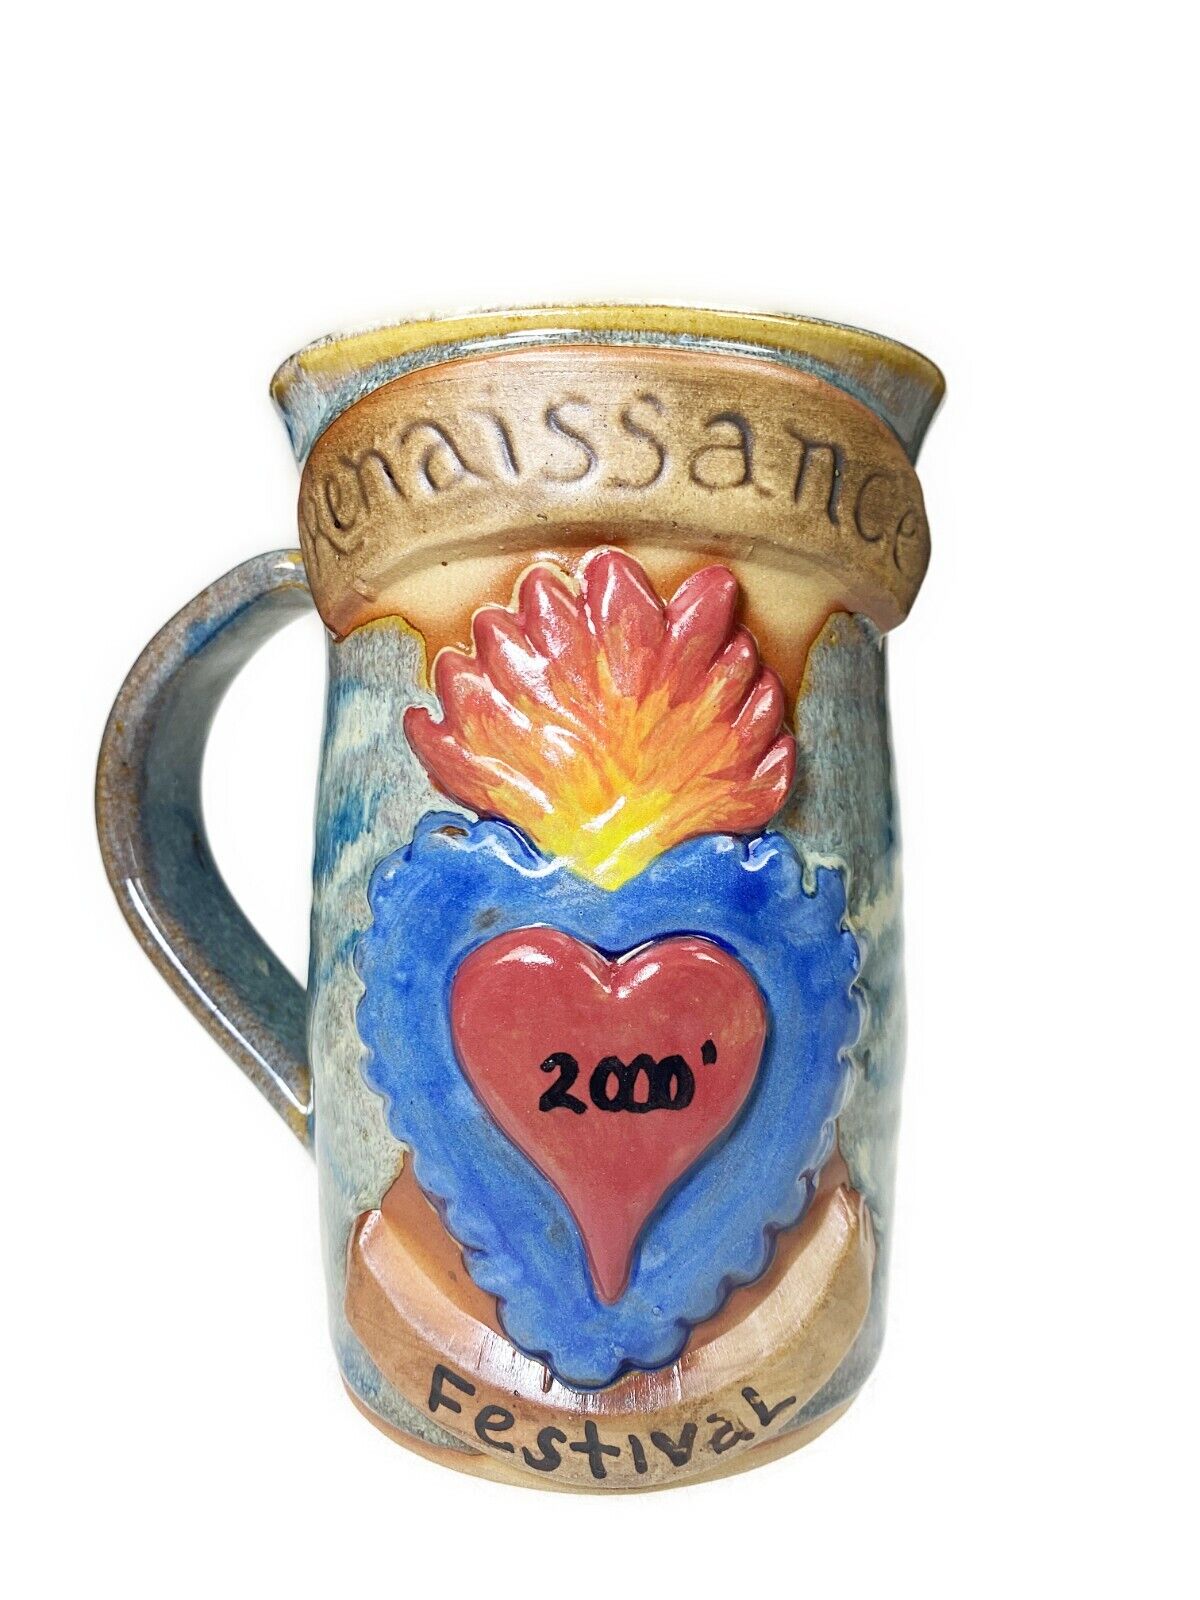 2000 Renaissance Festival Always Azul Pottery Flaming Heart Beer Mug Cup 